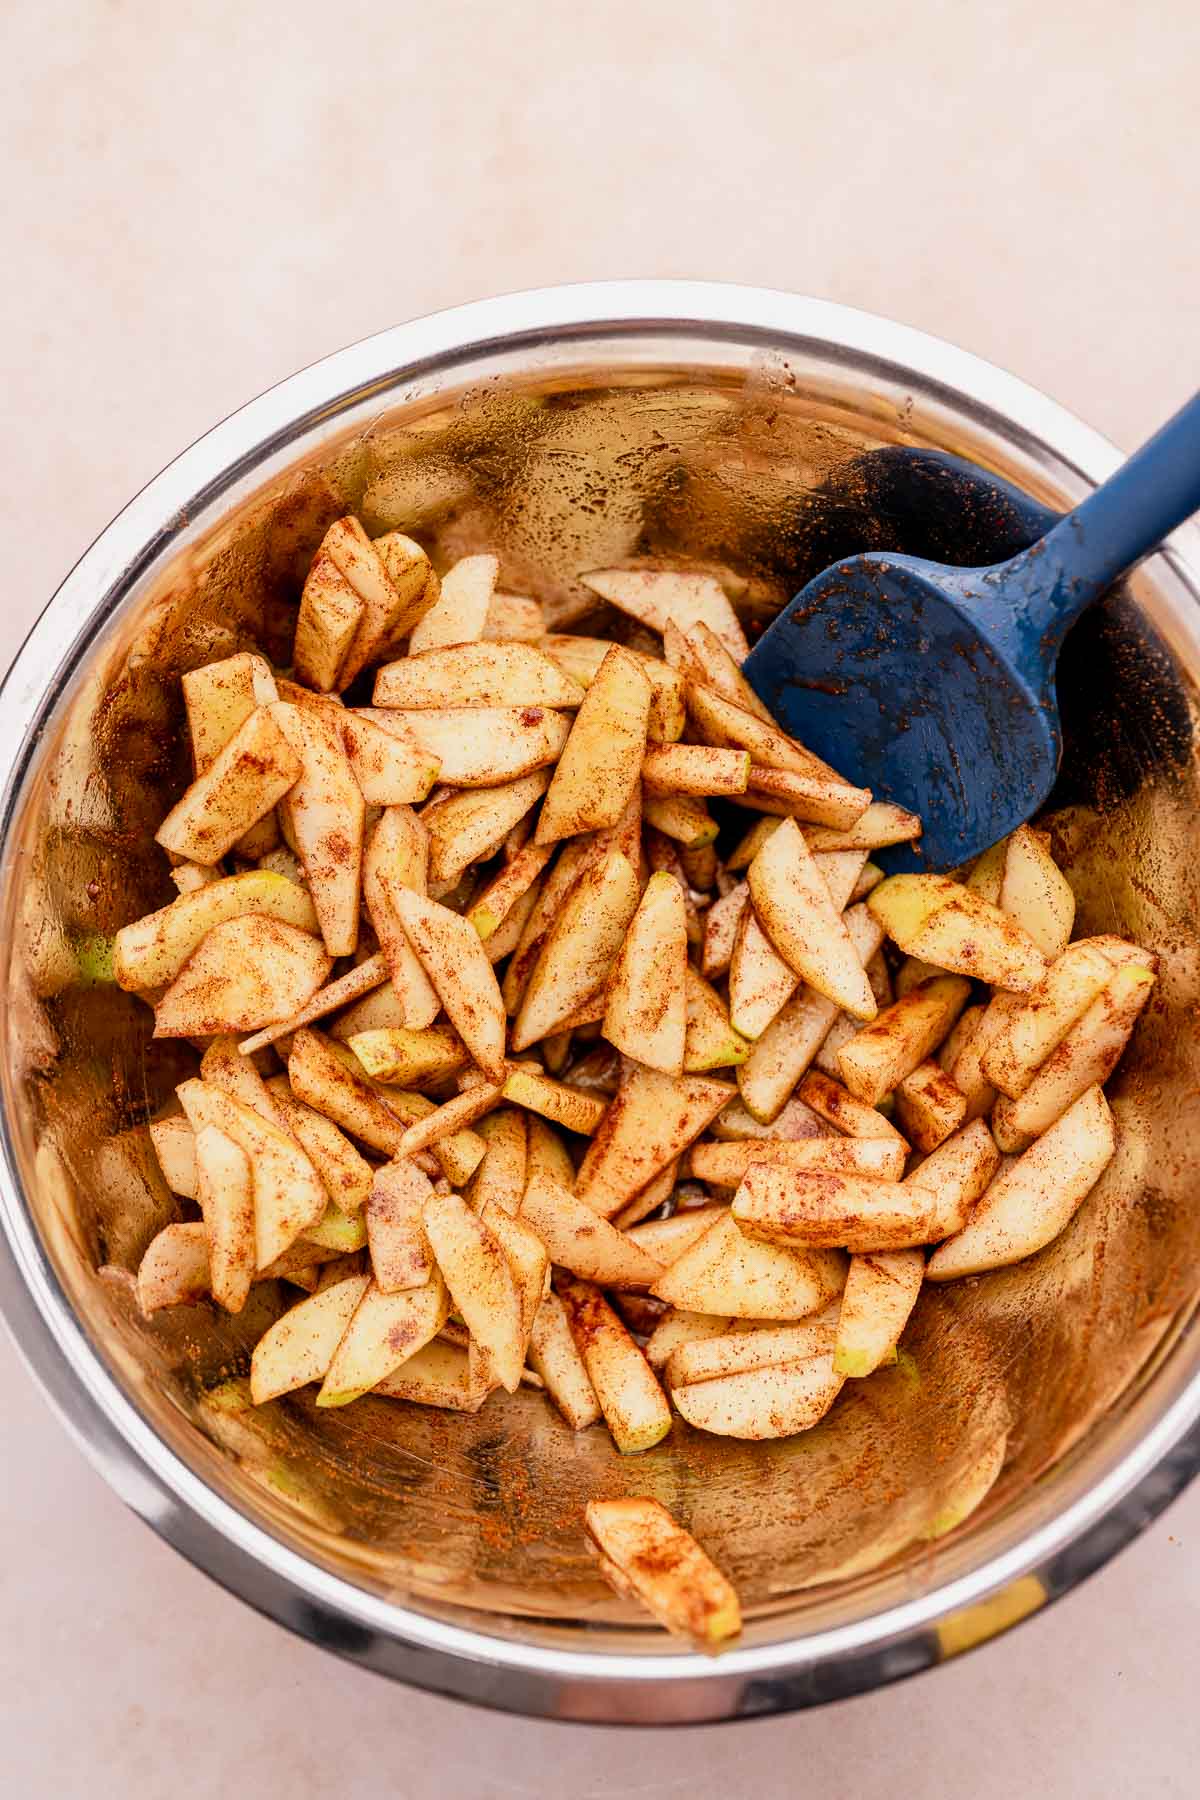 Gluten-free apple slices in a metal bowl with a blue spatula served alongside an apple crisp.